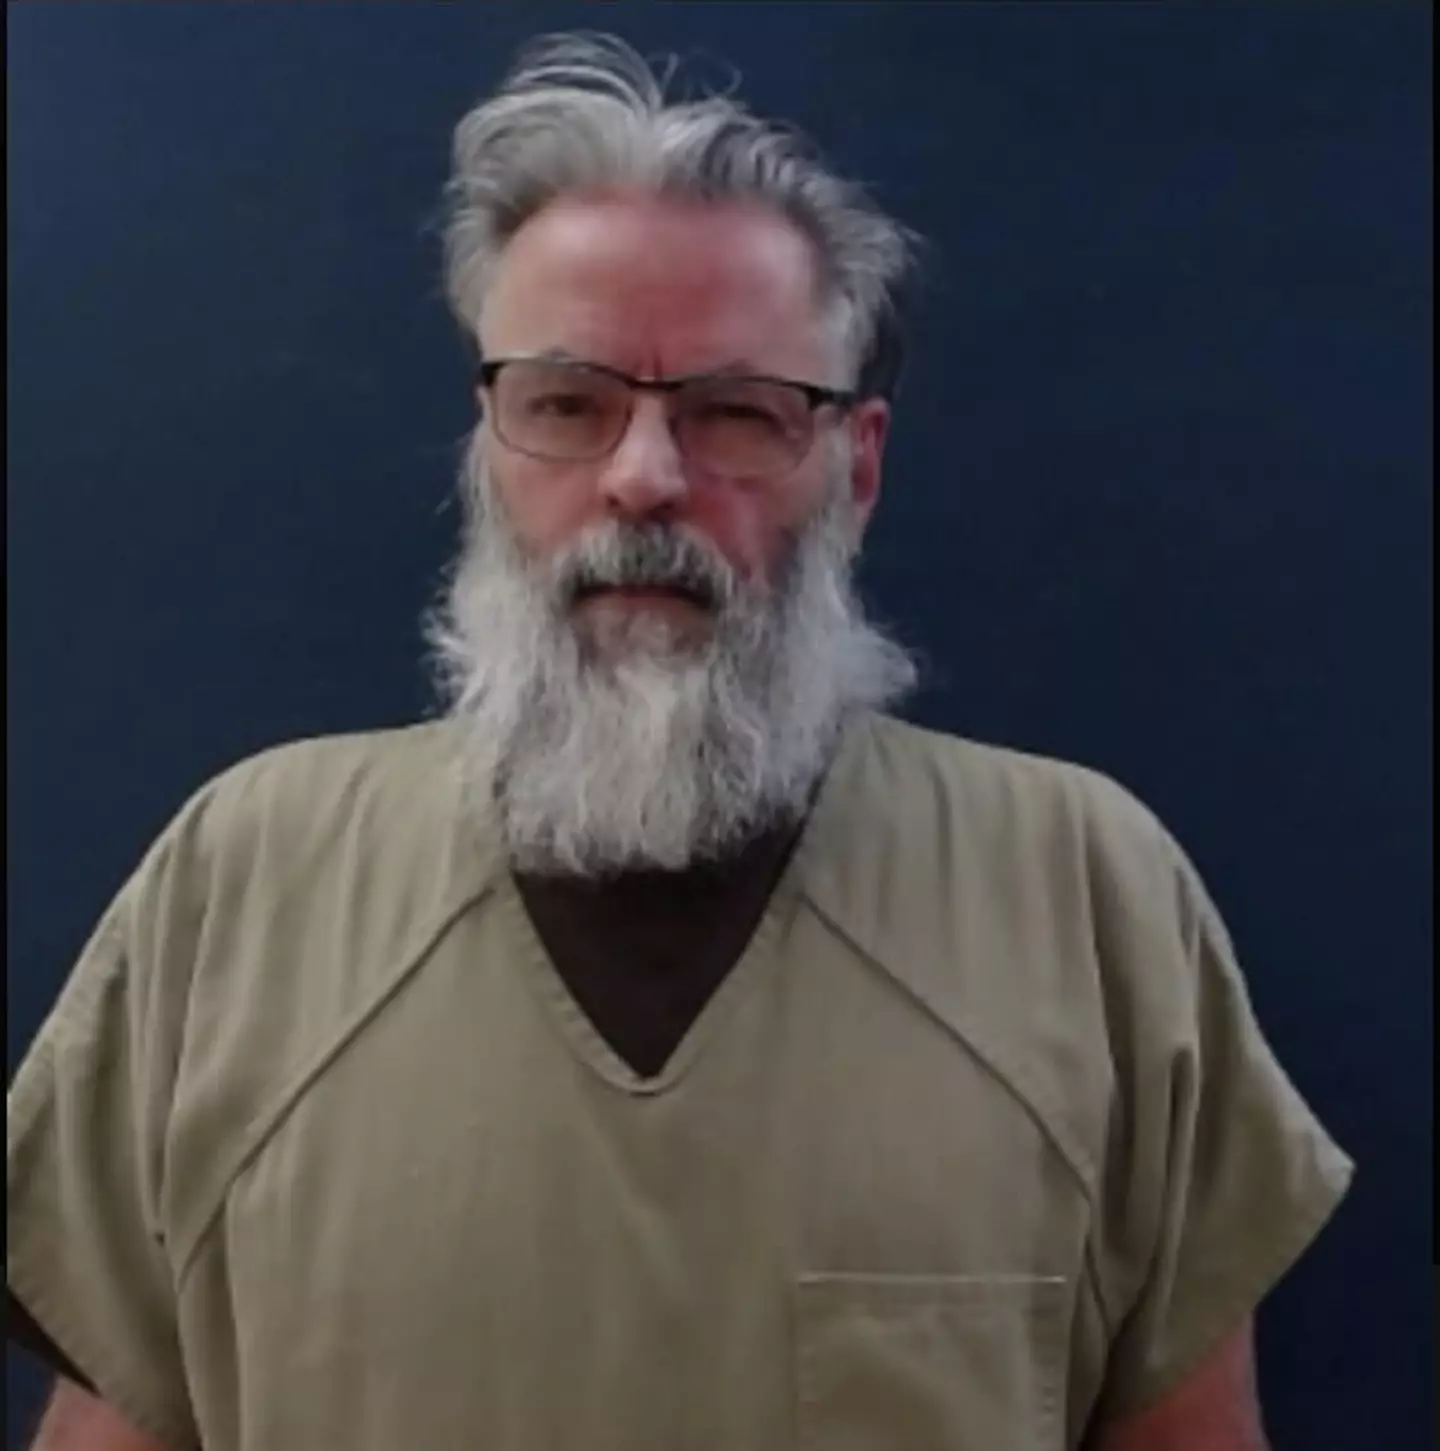 Kevin Sypher after his arrest. (Teller County Jail)